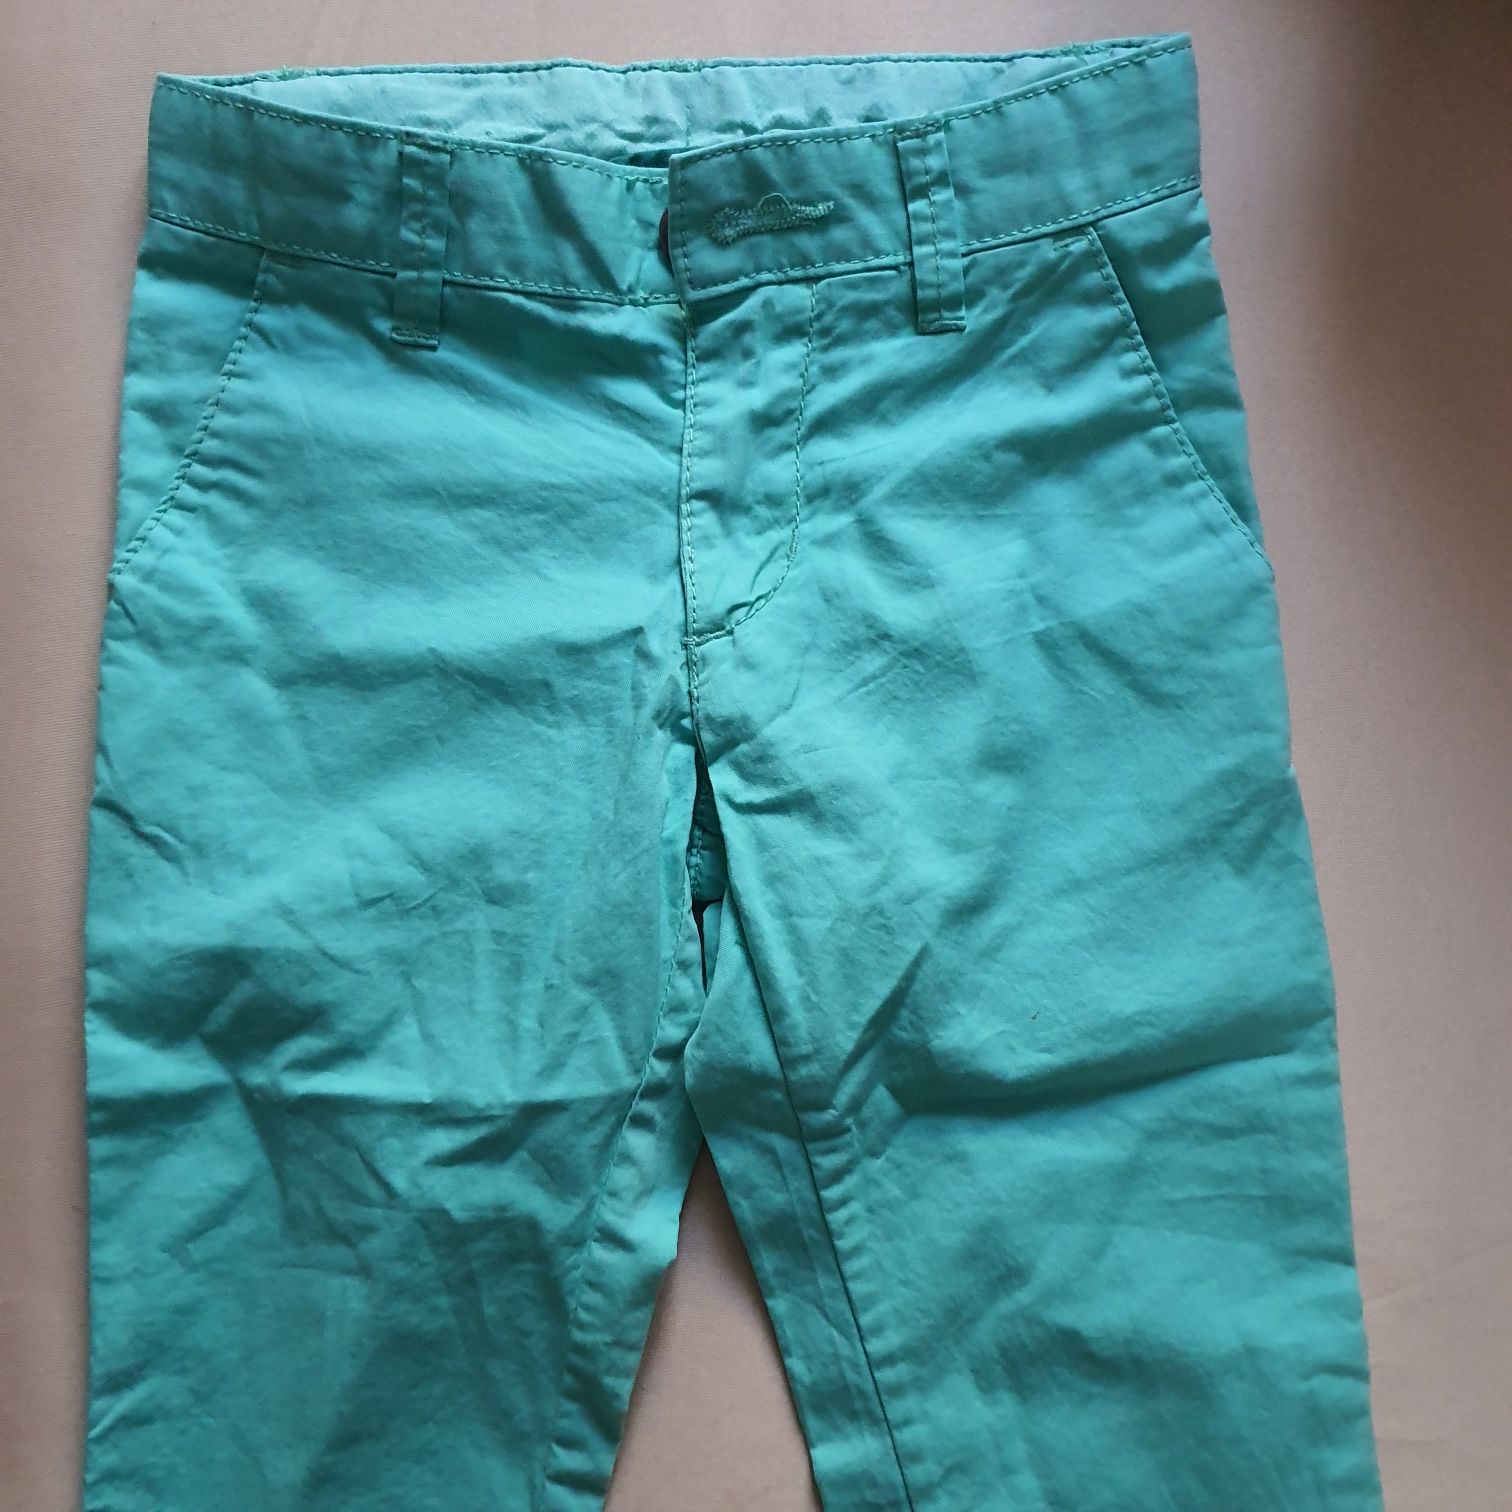 Pantaloni băieți 2 ani - verde